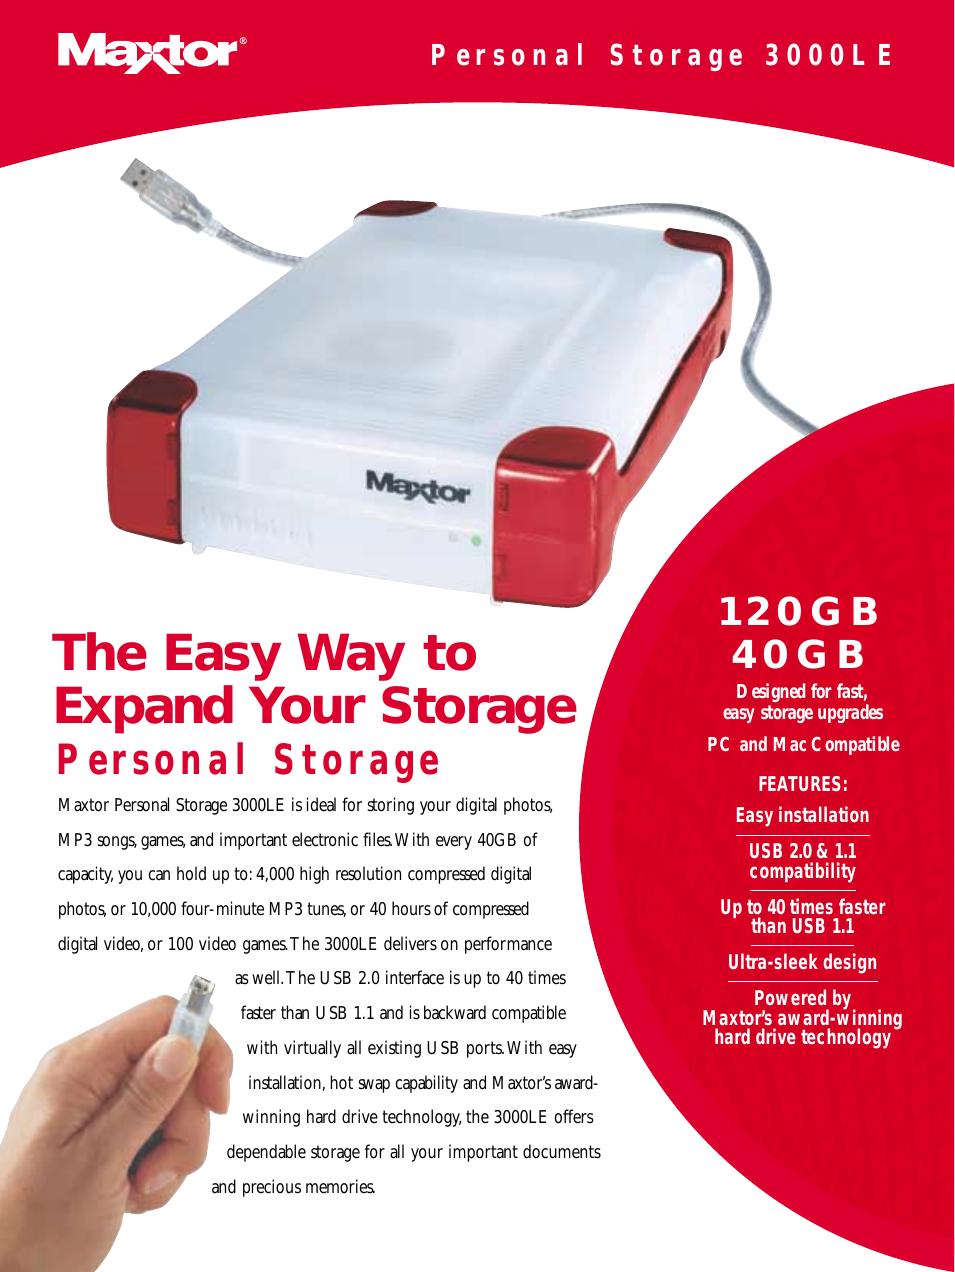 Personal Storage 3000LE